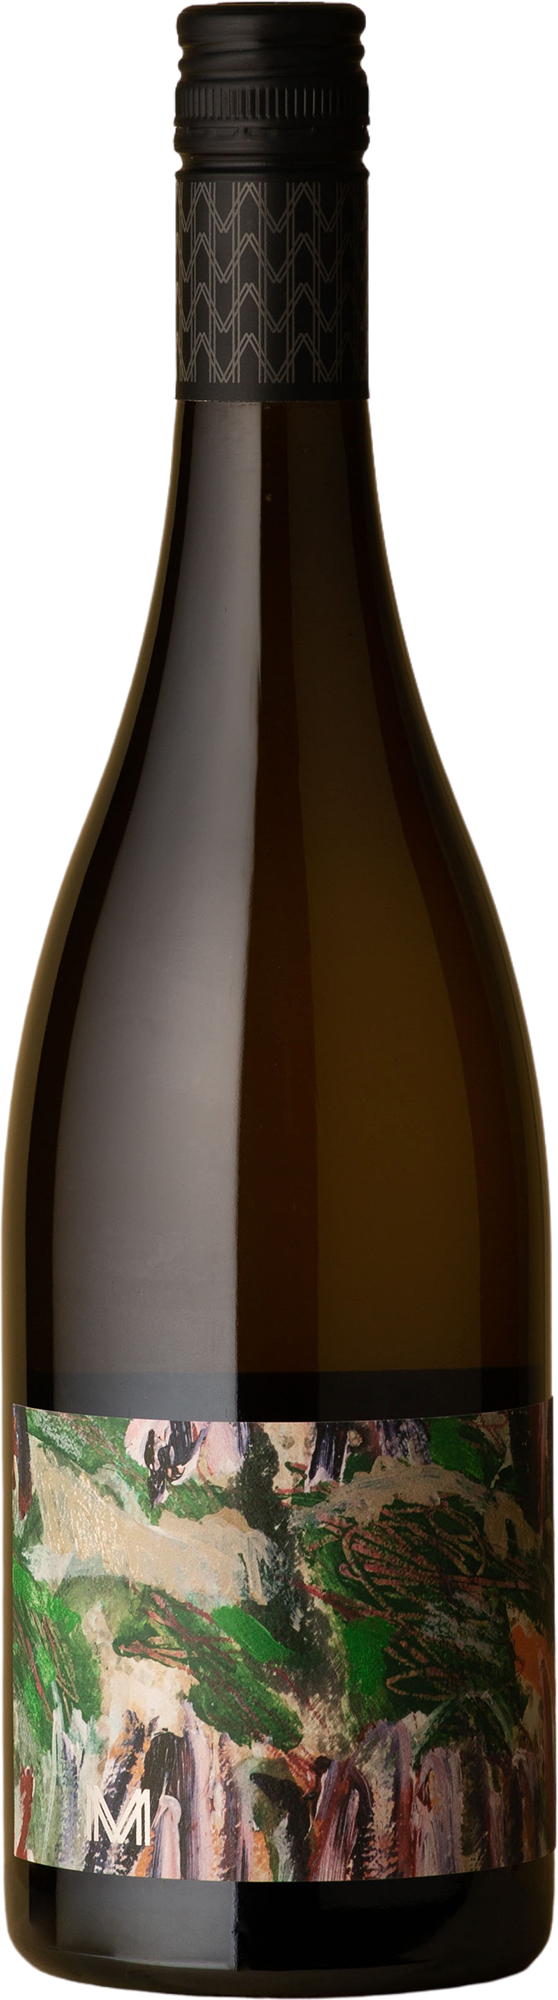 Mulline - Portarlington Chardonnay 2019 White Wine